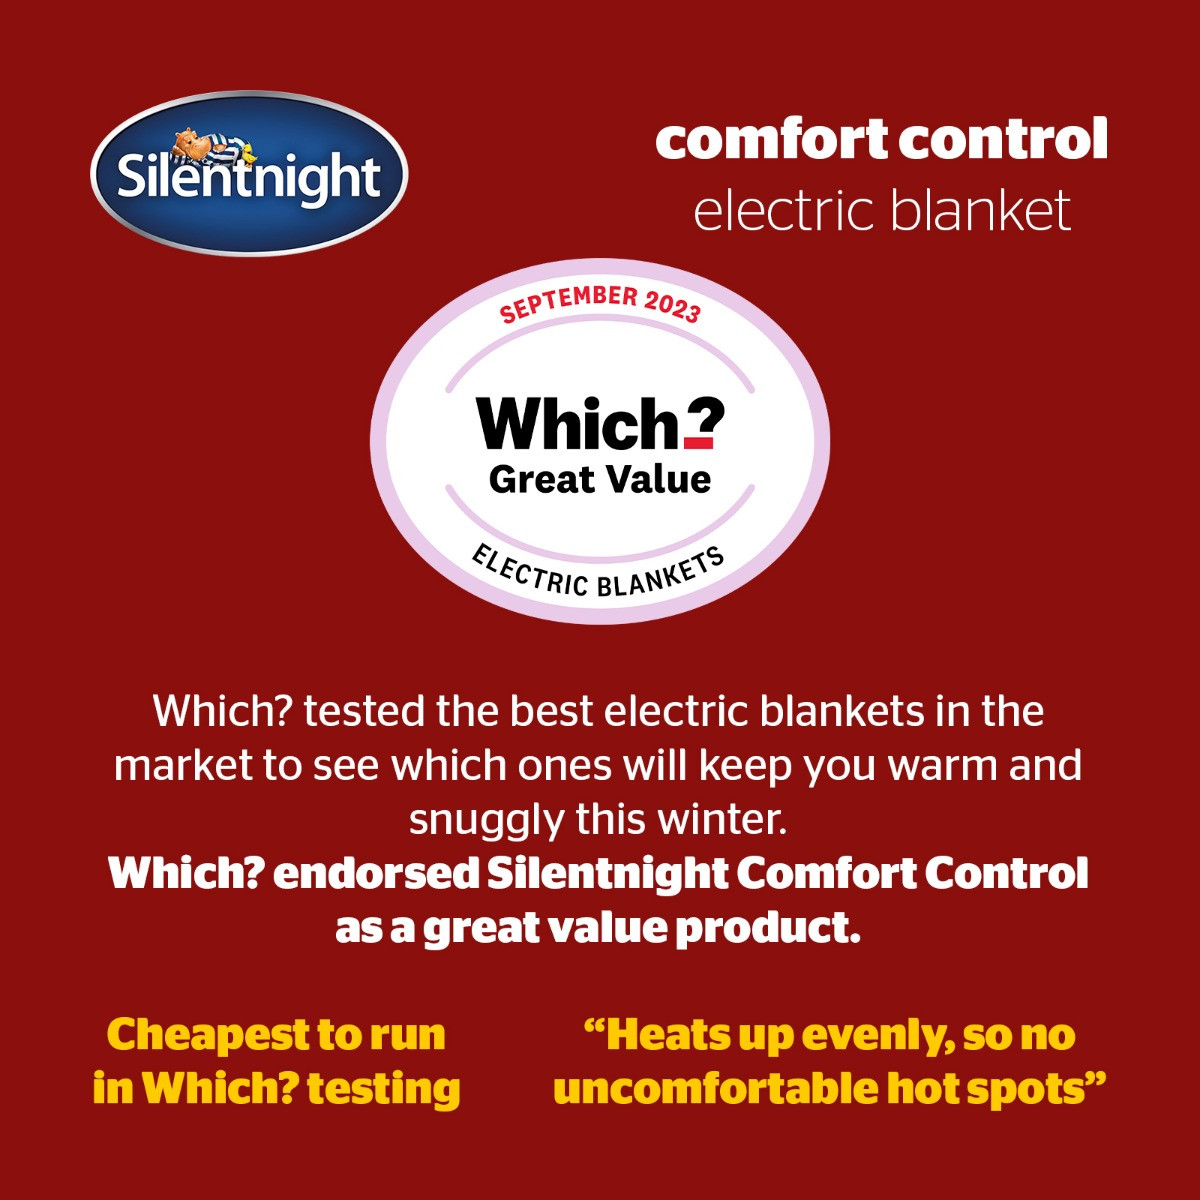 Silentnight Comfort Control Electric Blanket>